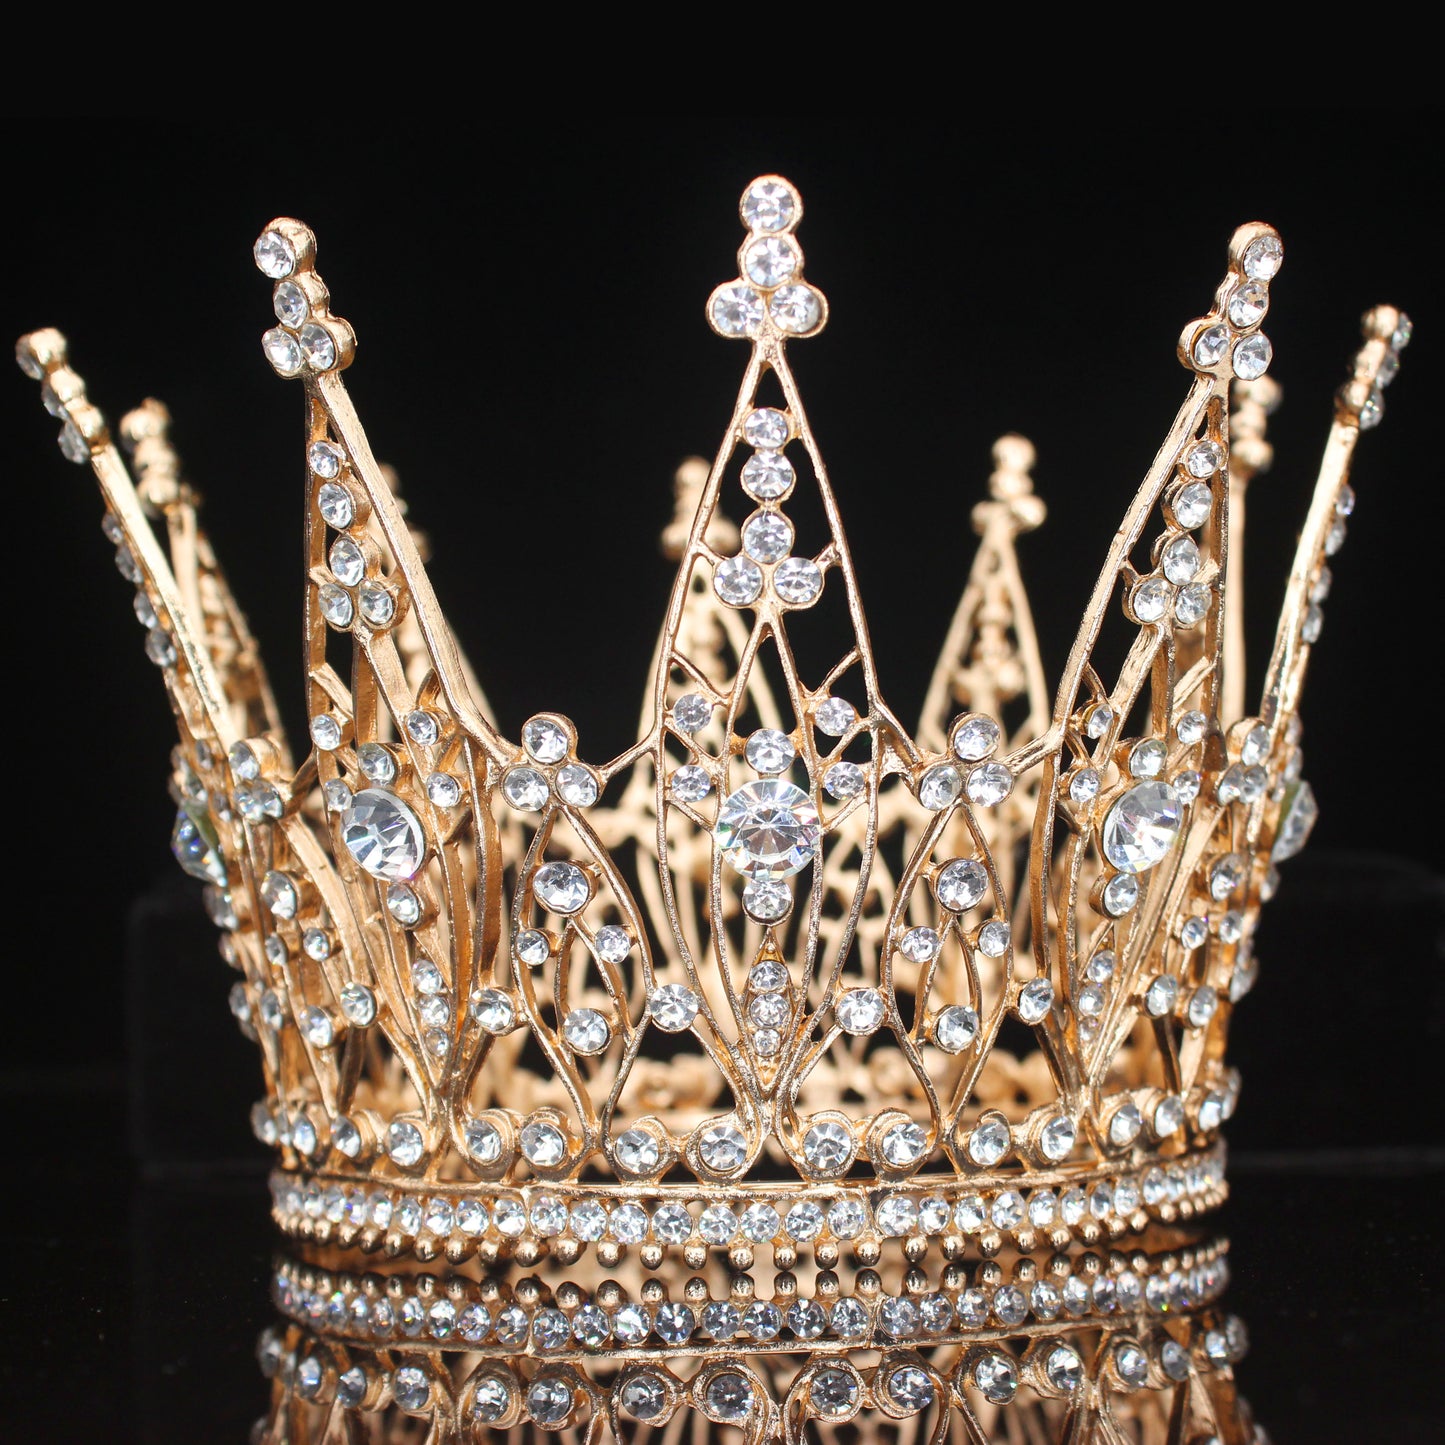 Rhinestone Princess Show Tiara Crown  Wedding Hair Jewelry Accessory - TulleLux Bridal Crowns &  Accessories 